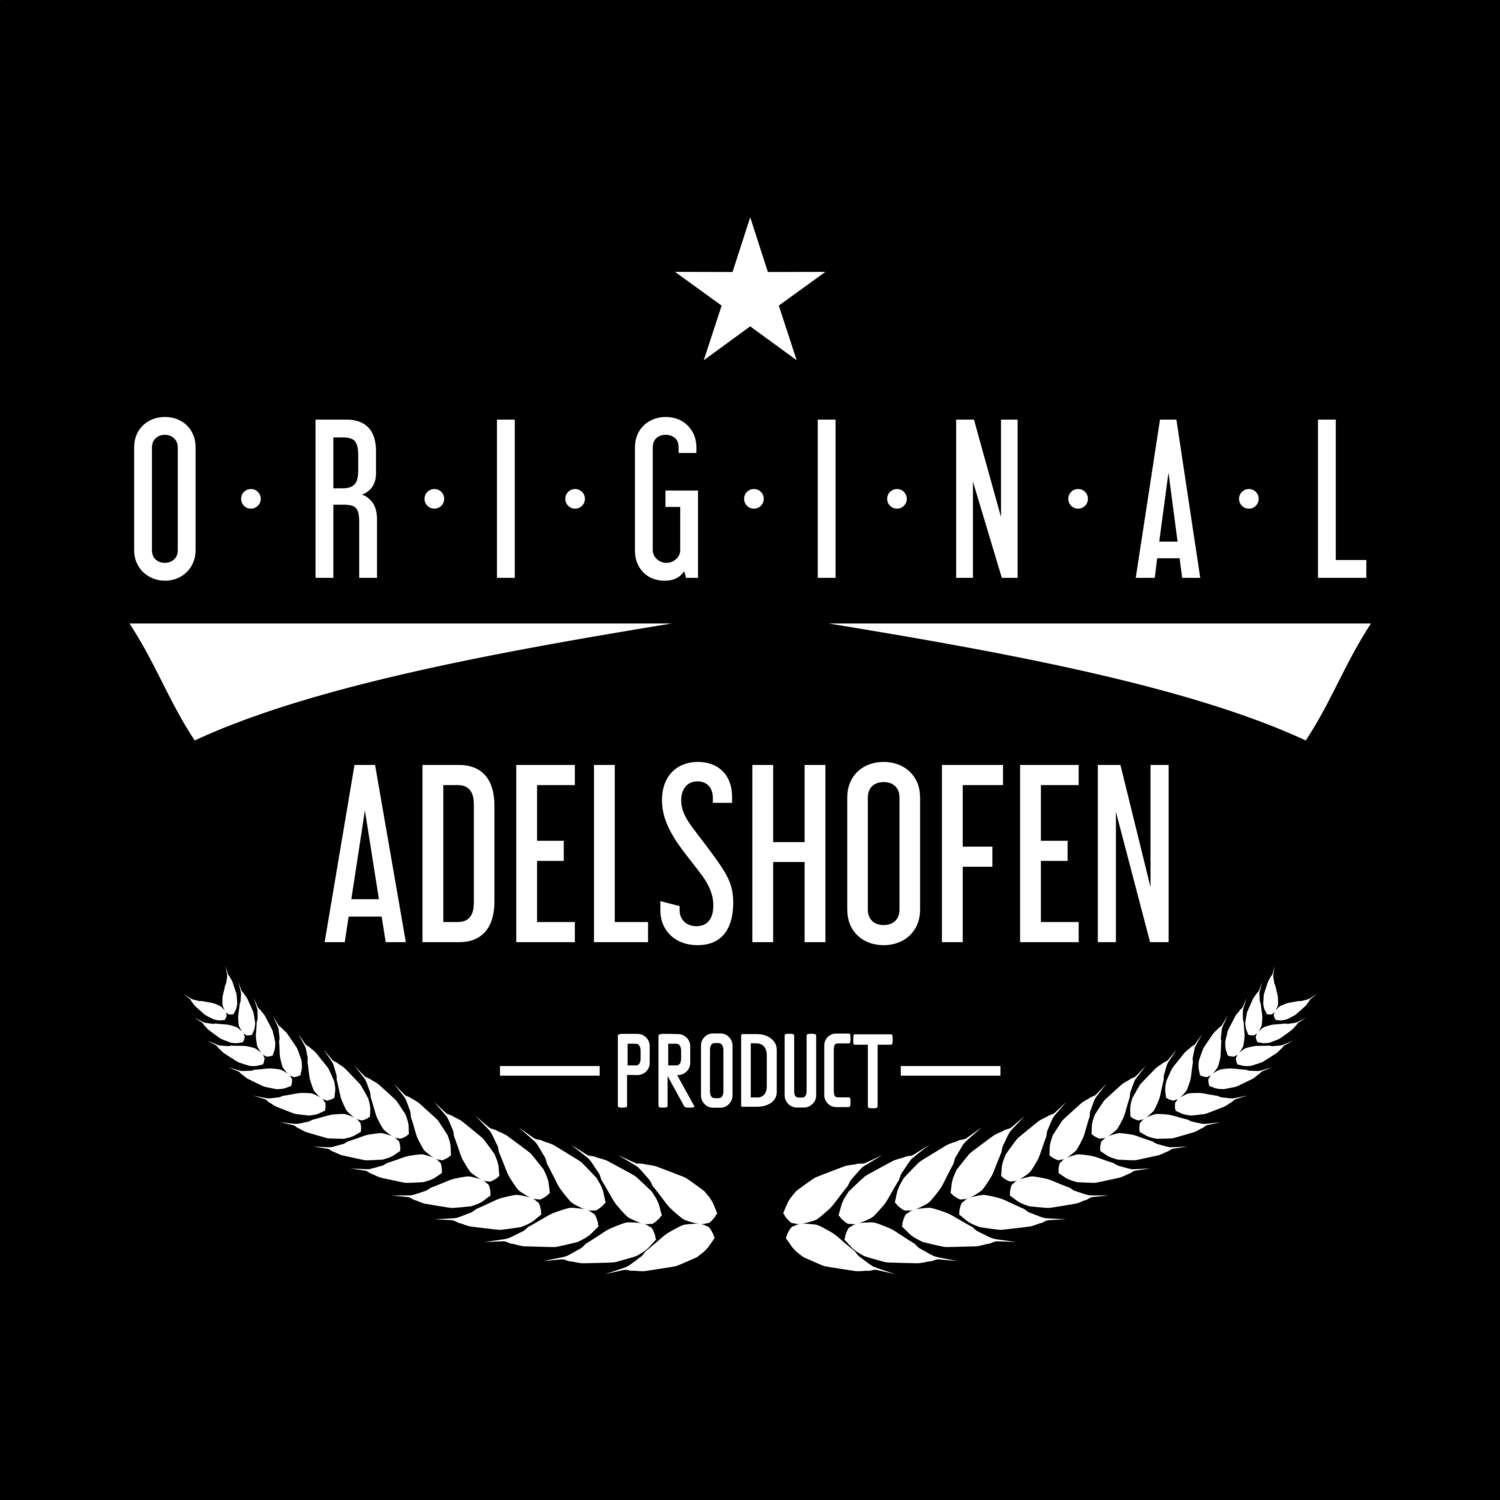 Adelshofen T-Shirt »Original Product«